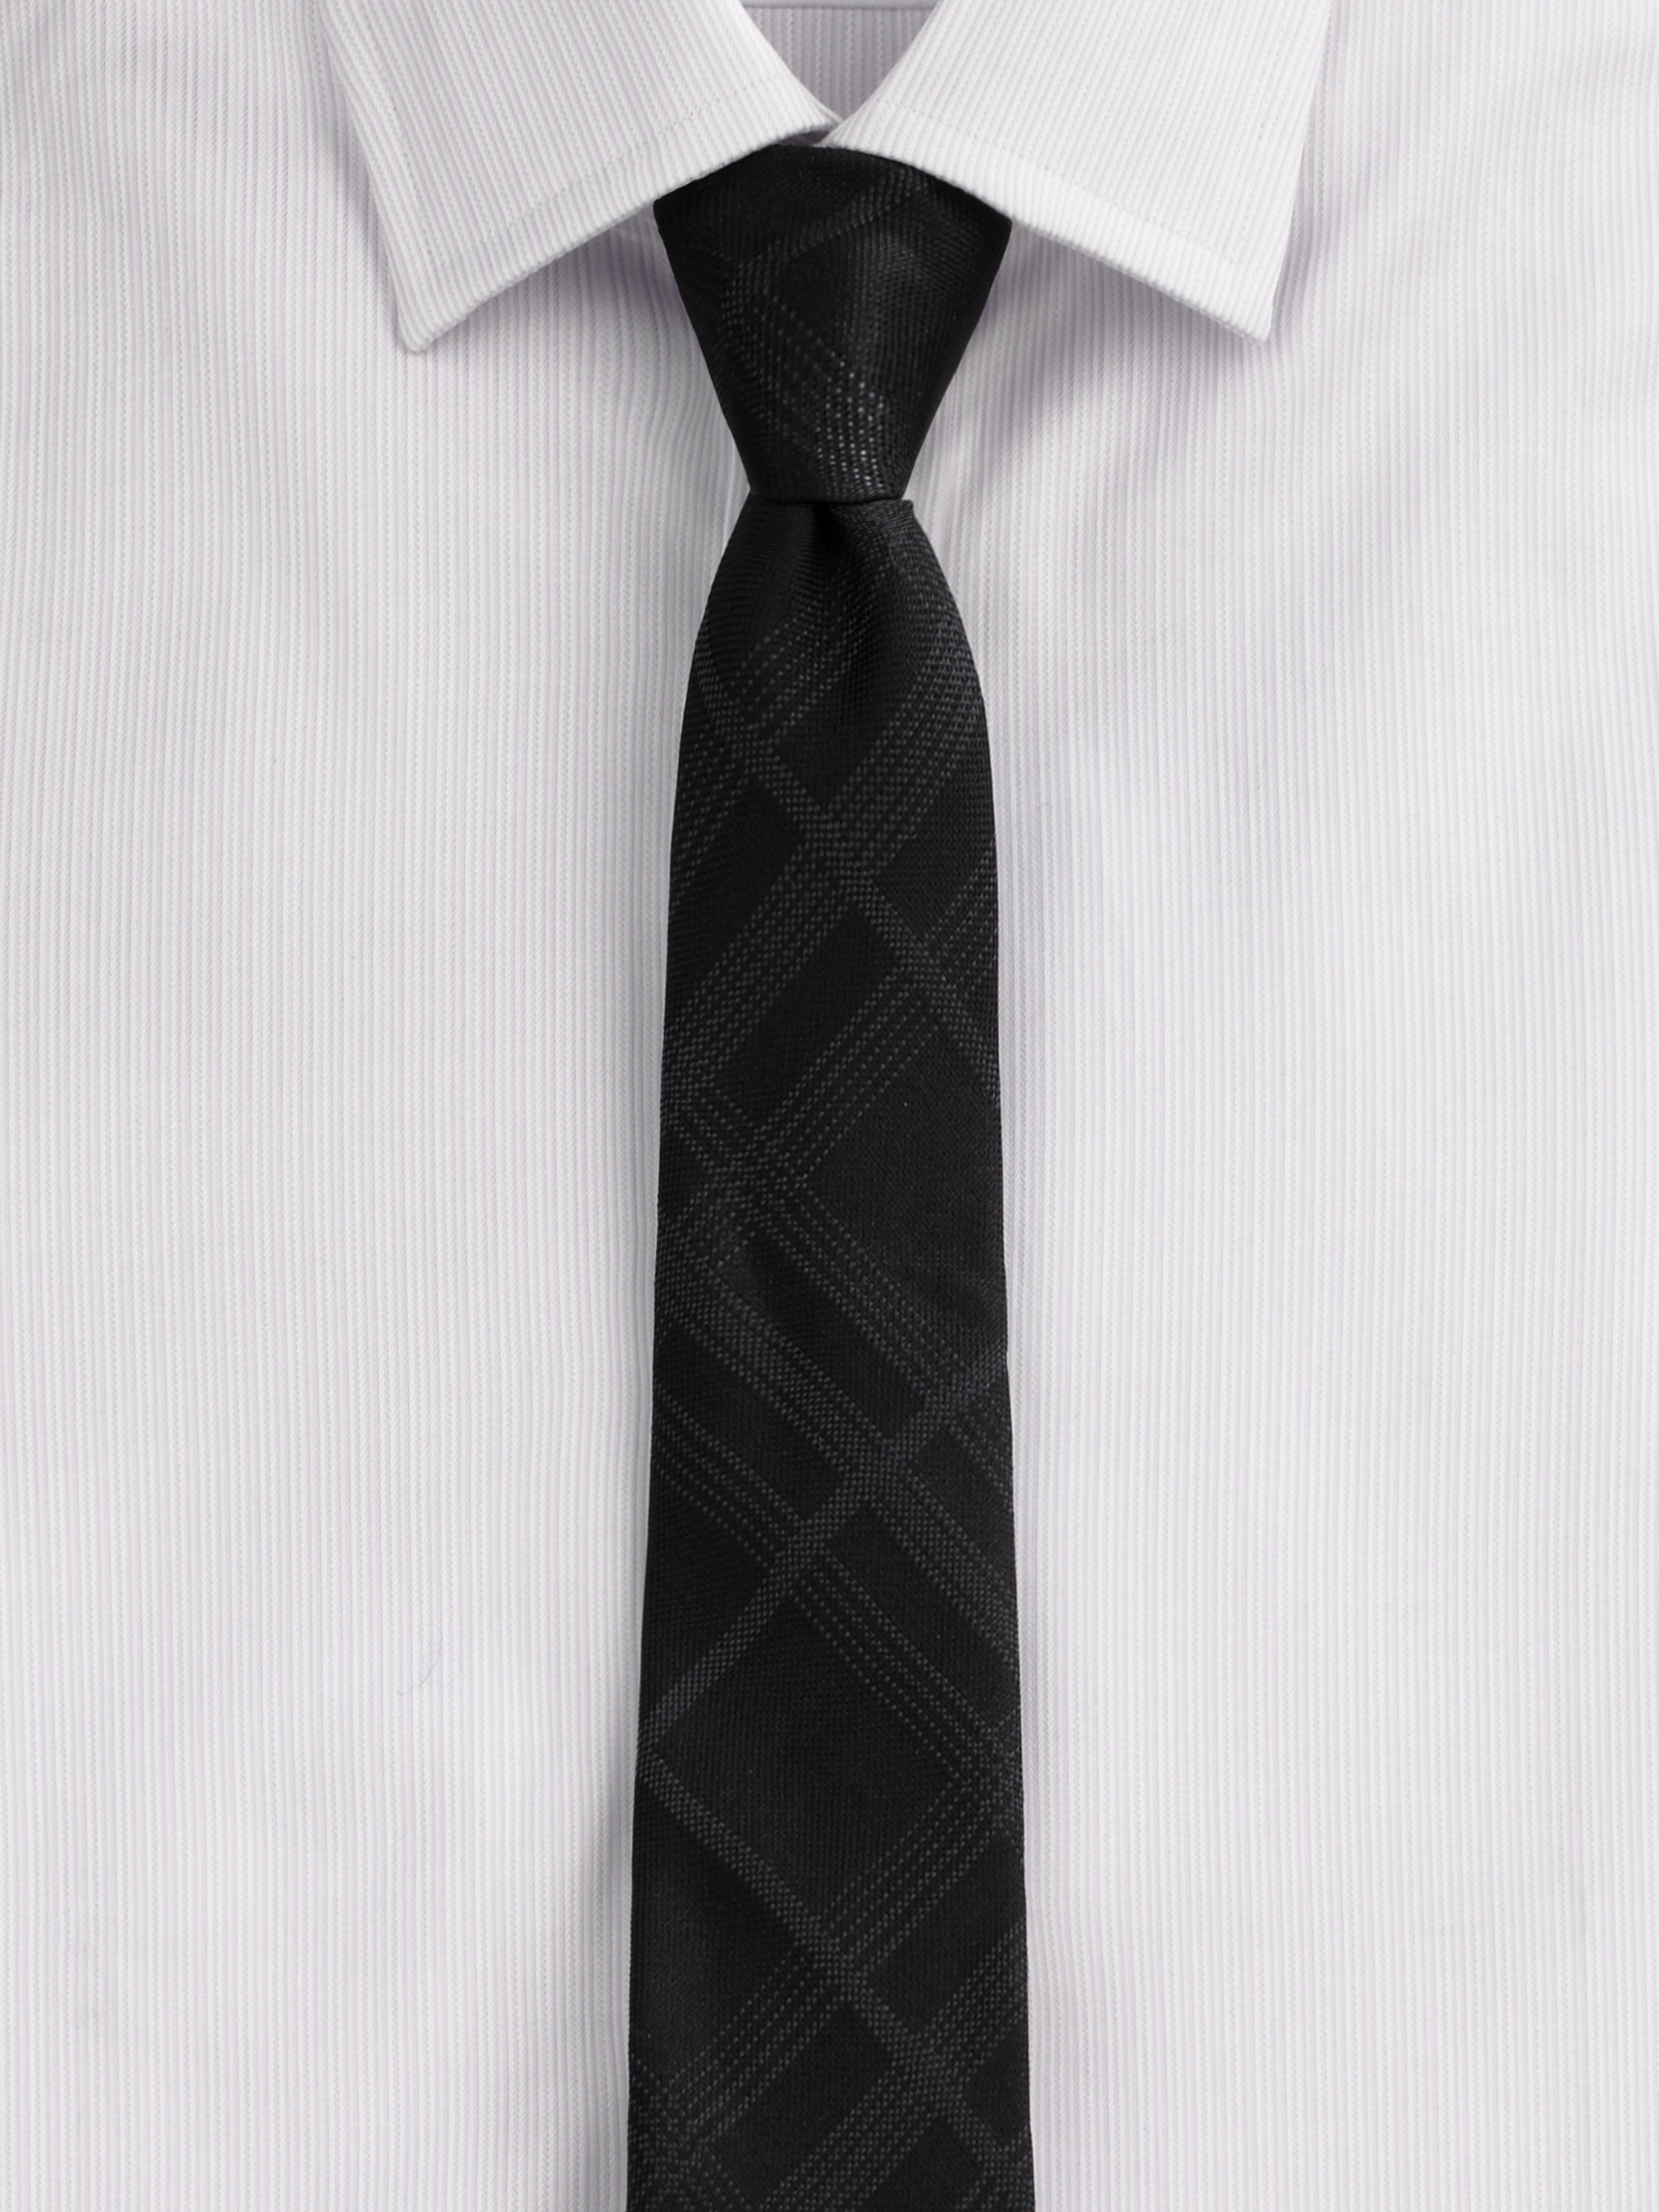 Burberry Tonal-check Silk Tie in Black for Men - Lyst